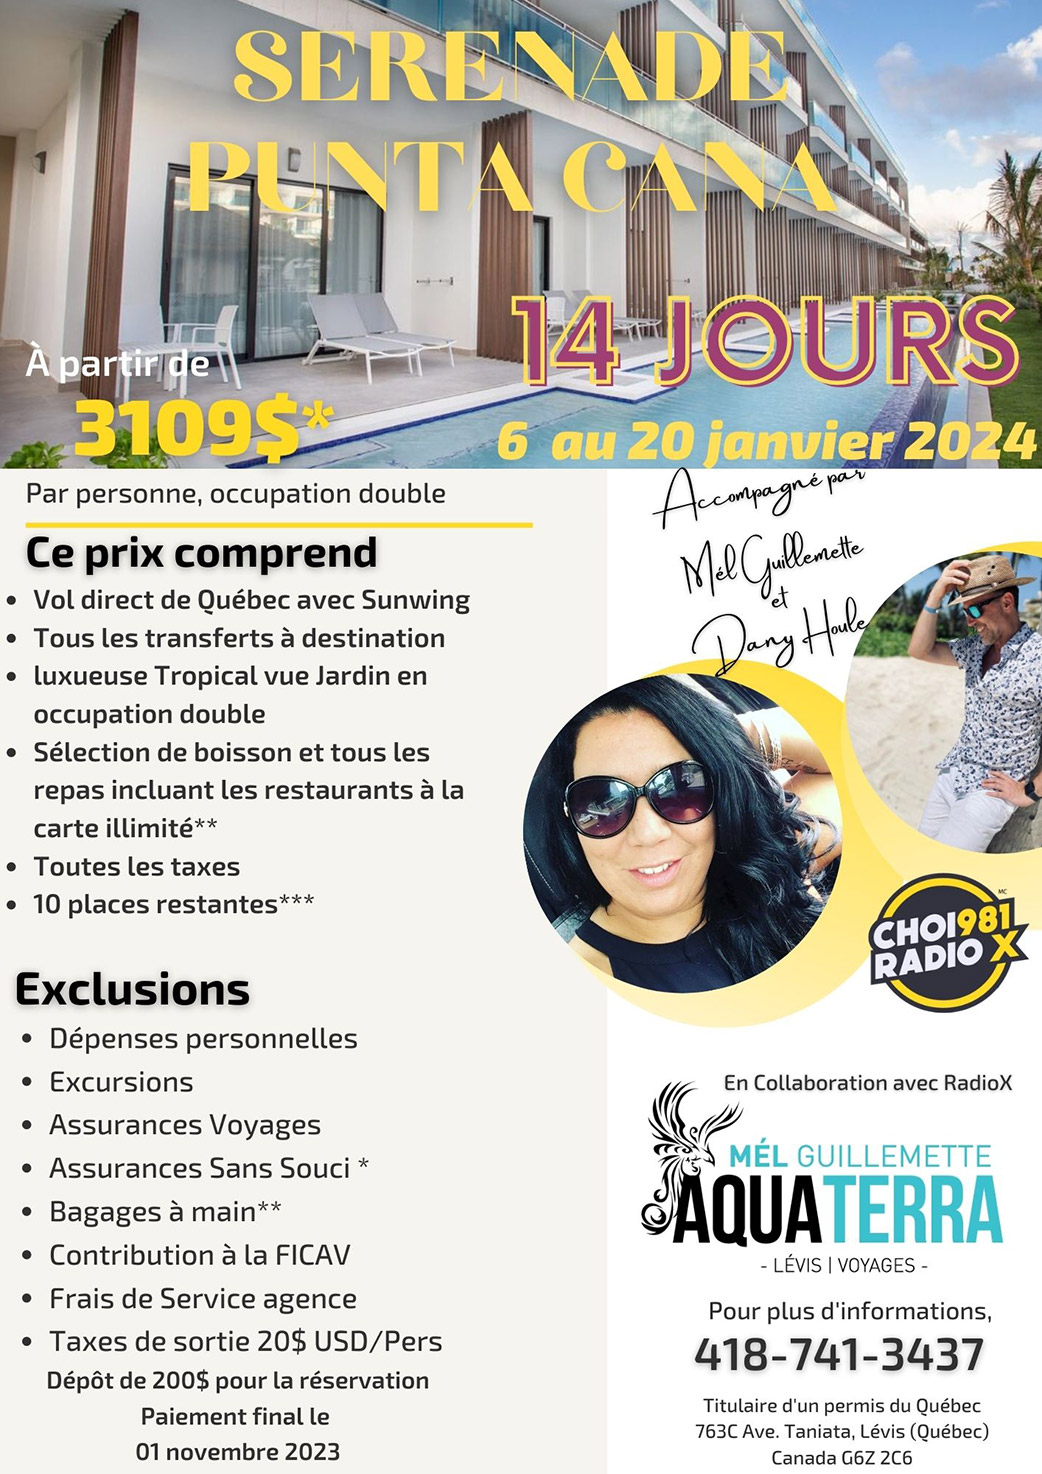 Voyage au Serenade Punta Cana Resort du 6 au 20 janvier 2024